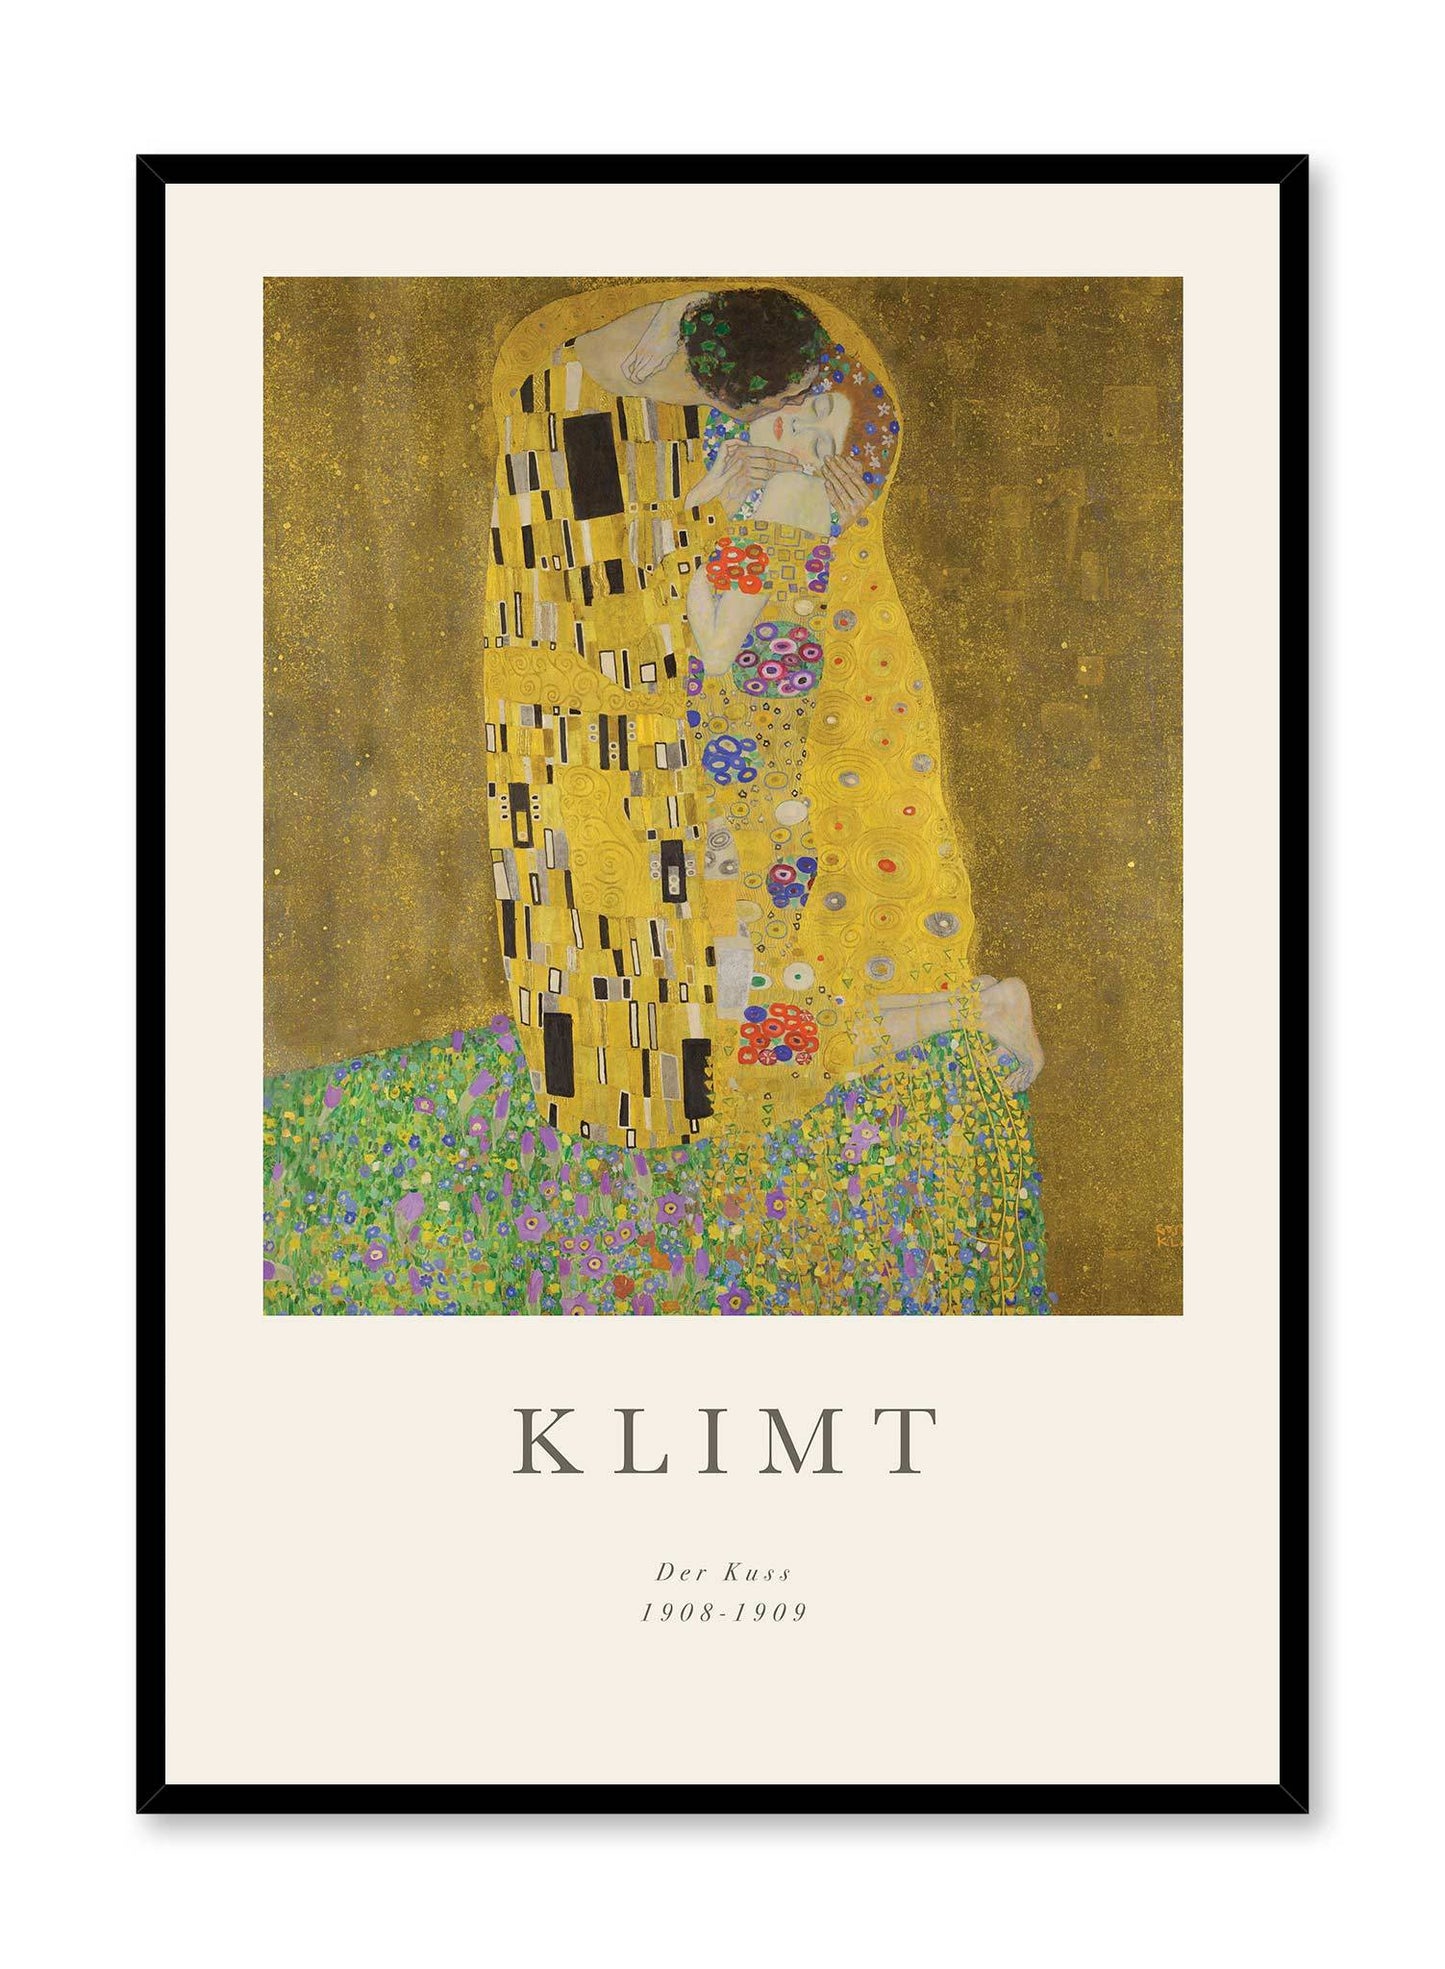 The Kiss s a minimalist artwork by Opposite Wall of Gustav Klimt's Der Kuss from 1908.